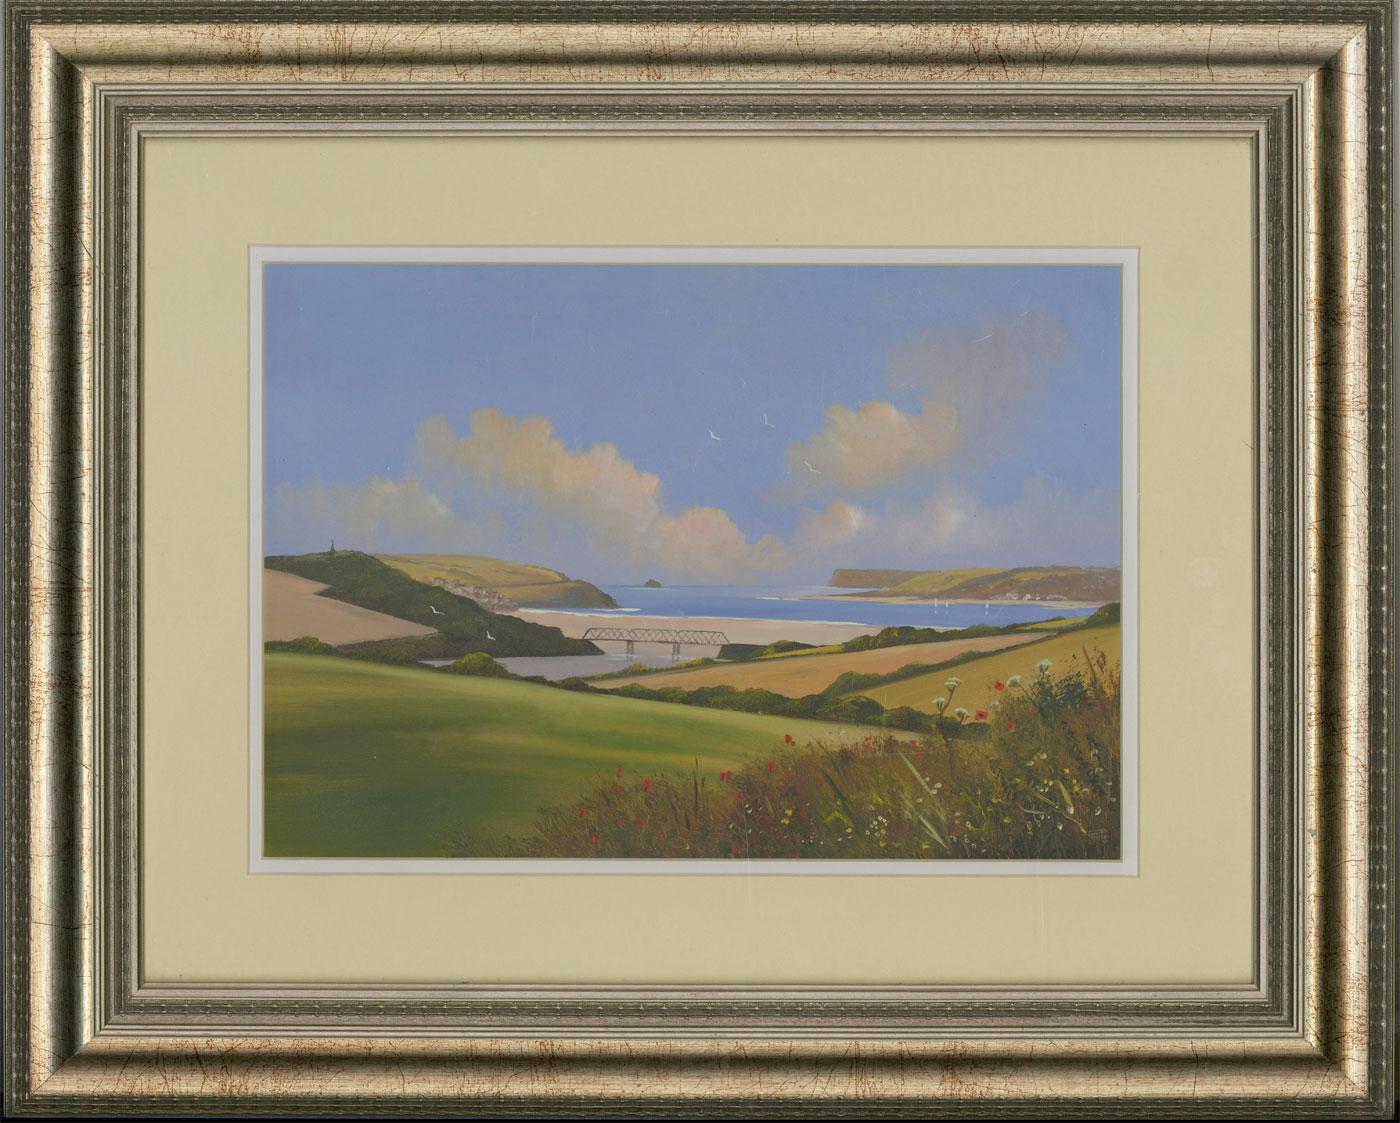 Michael J. Poole - Framed Contemporary Acrylic, Camel Estuary, Cornish Coast